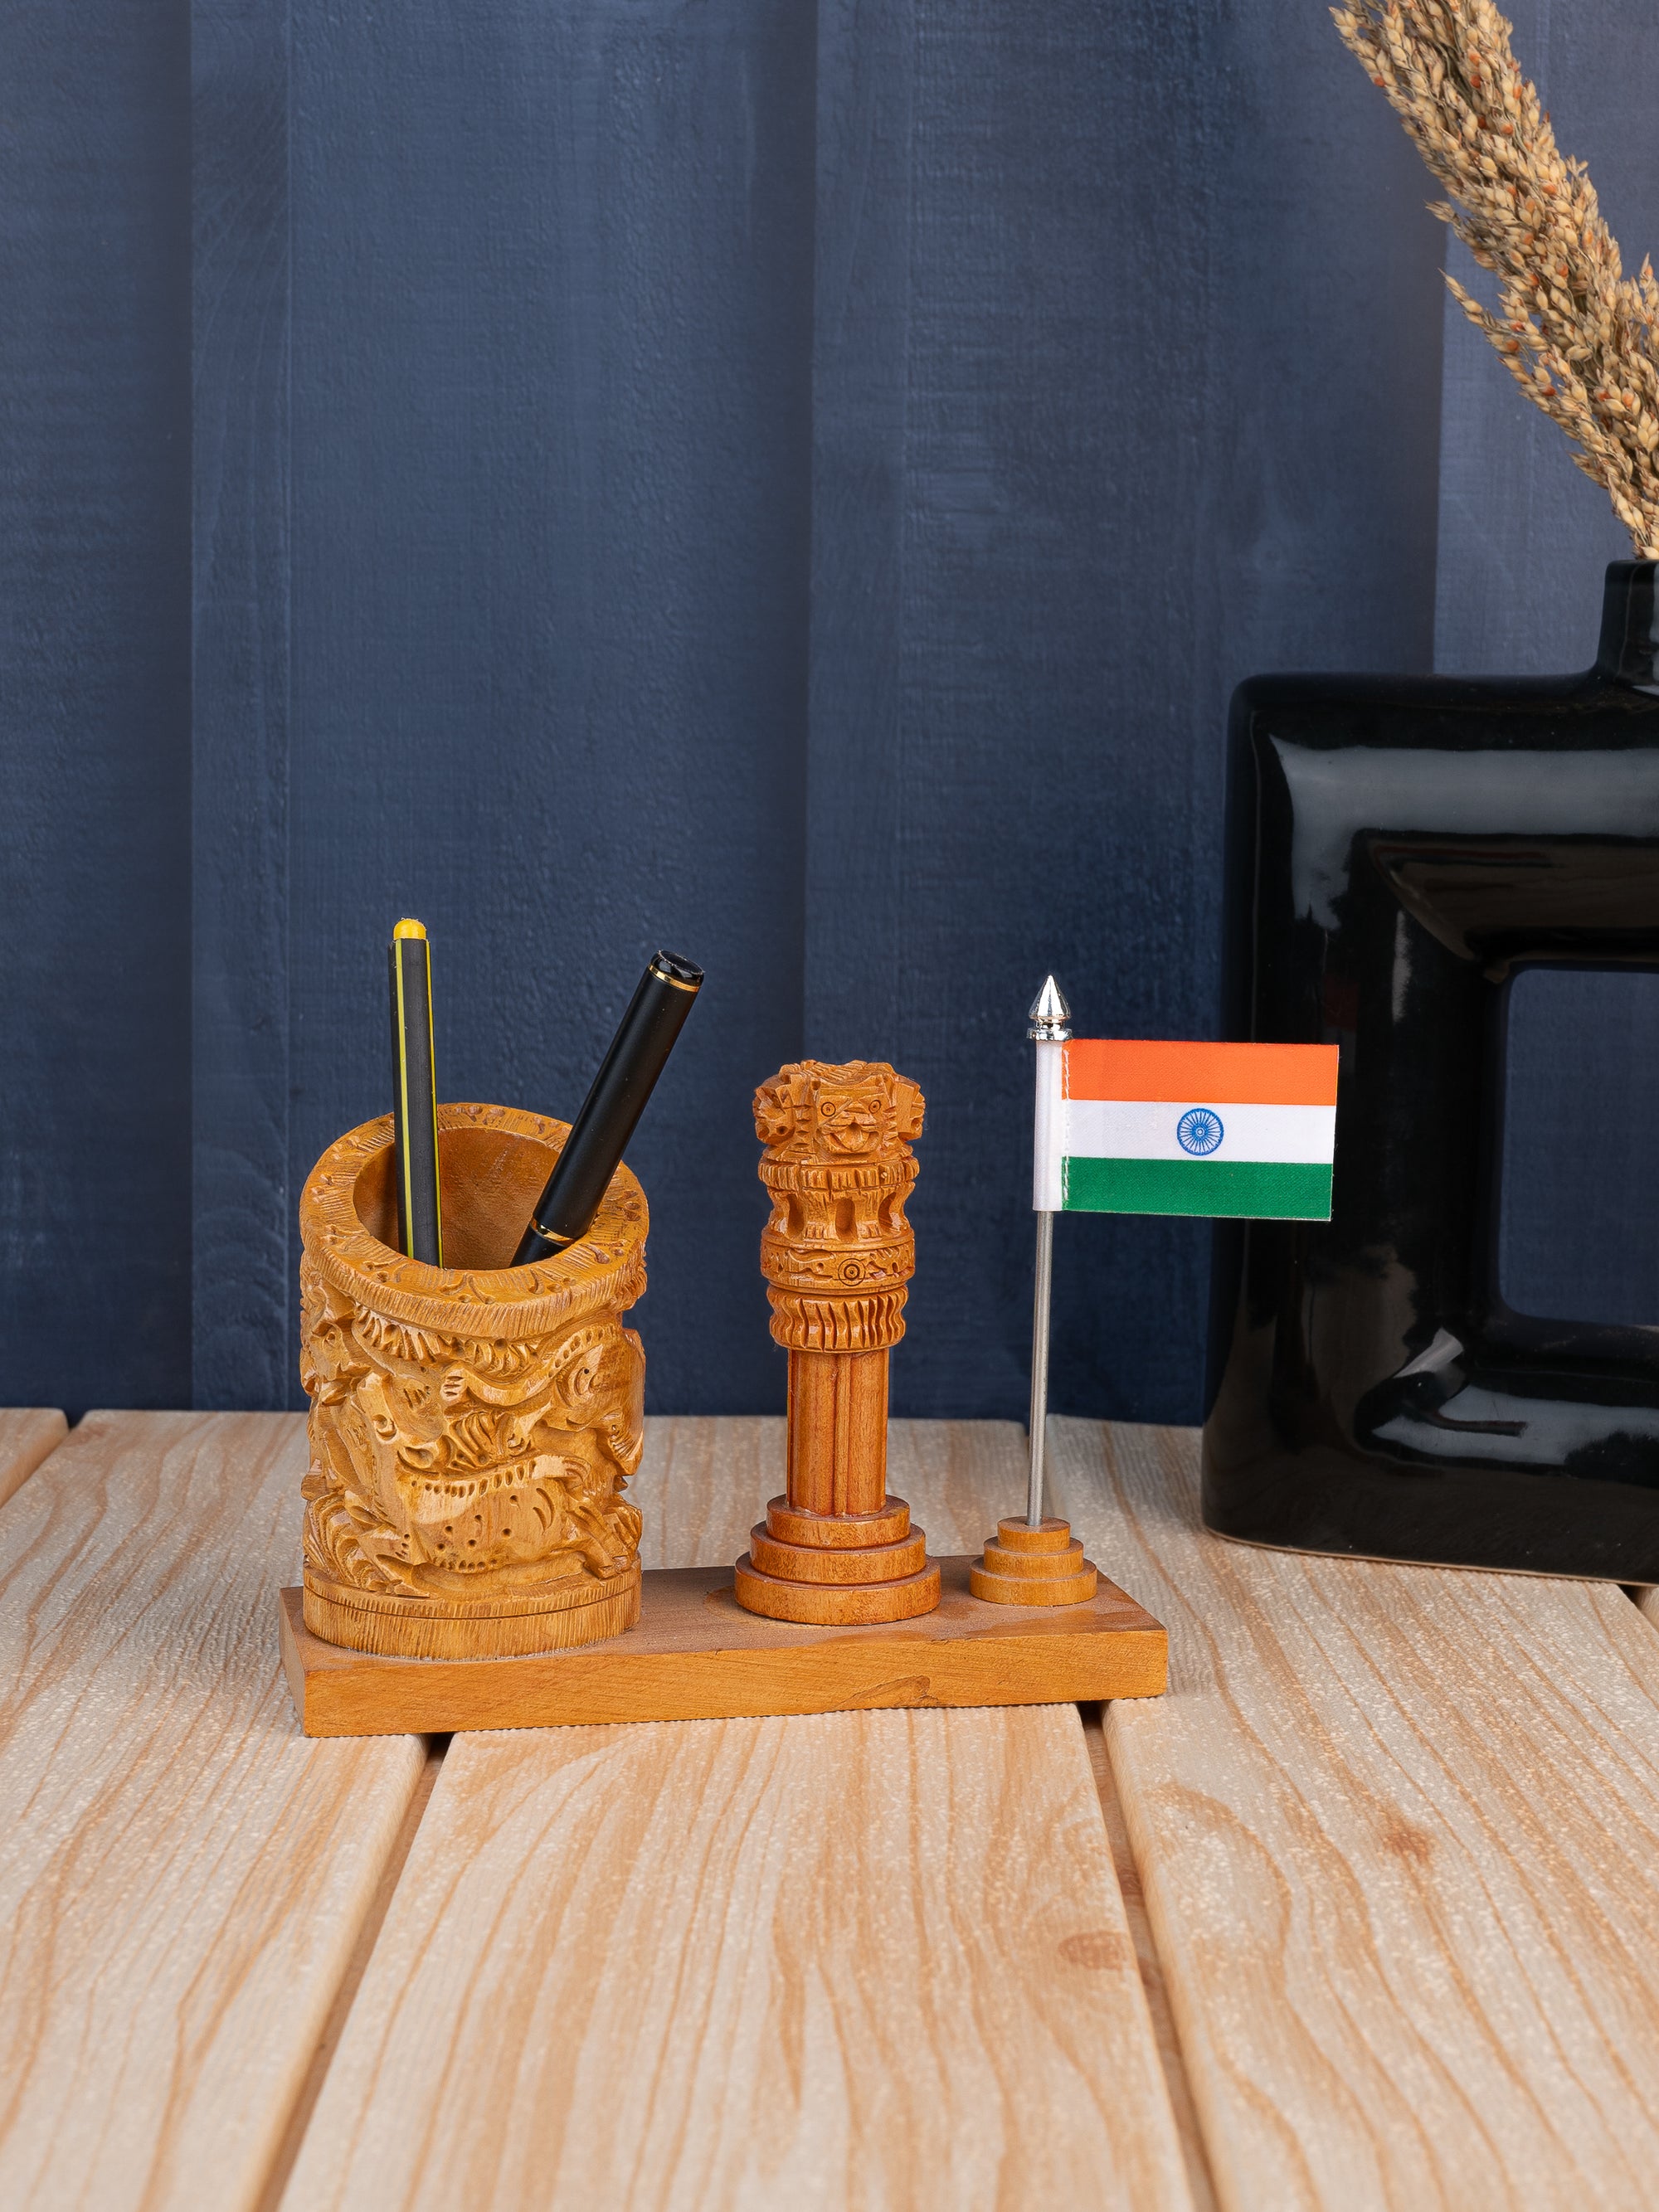 Wild animals Carved Pen holder with Ashoka pillar and National flag made of Kadam wood